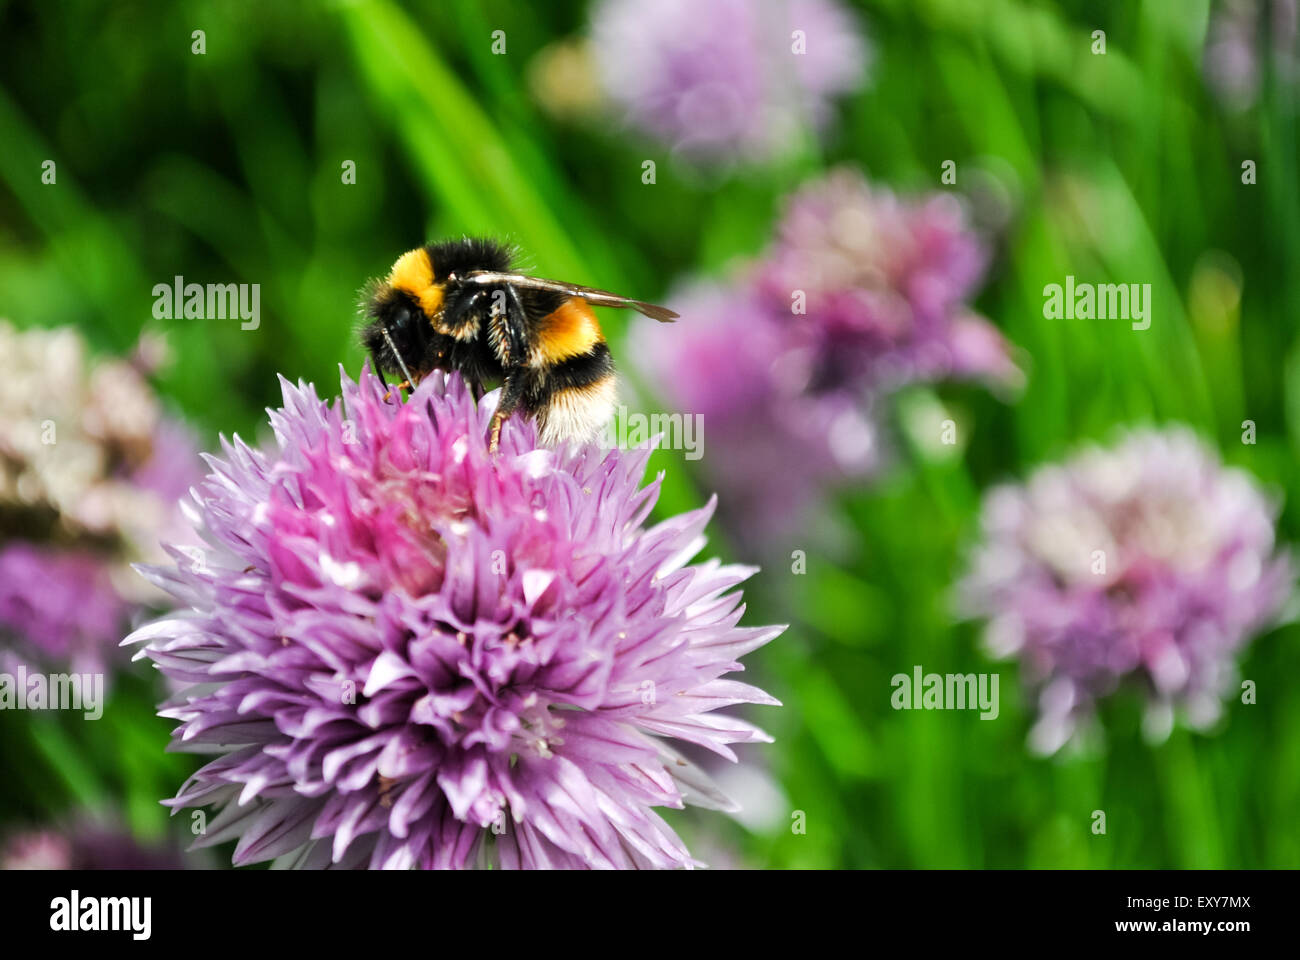 A Bee Pollinating a Chive Flower, Allium schoenoprasum Stock Photo